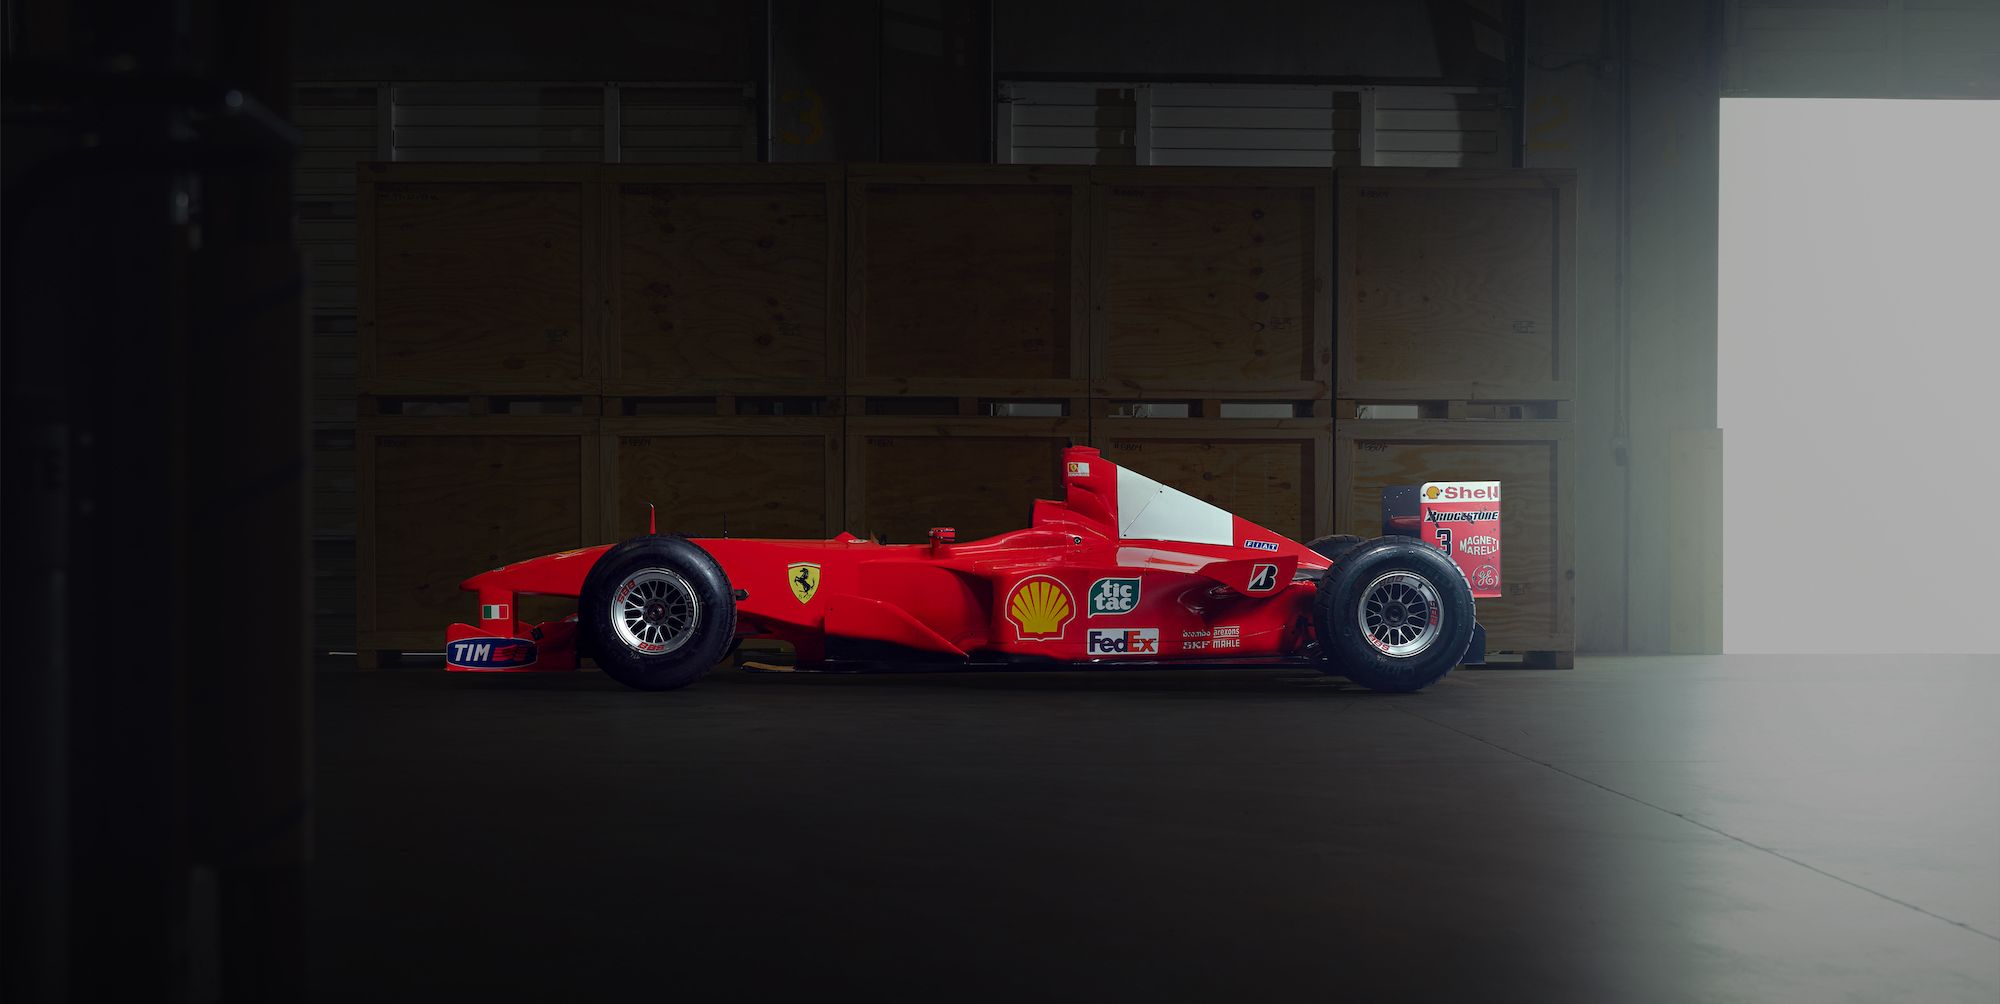 Schumacher's Ferrari F1-2000 Is Heading to Auction